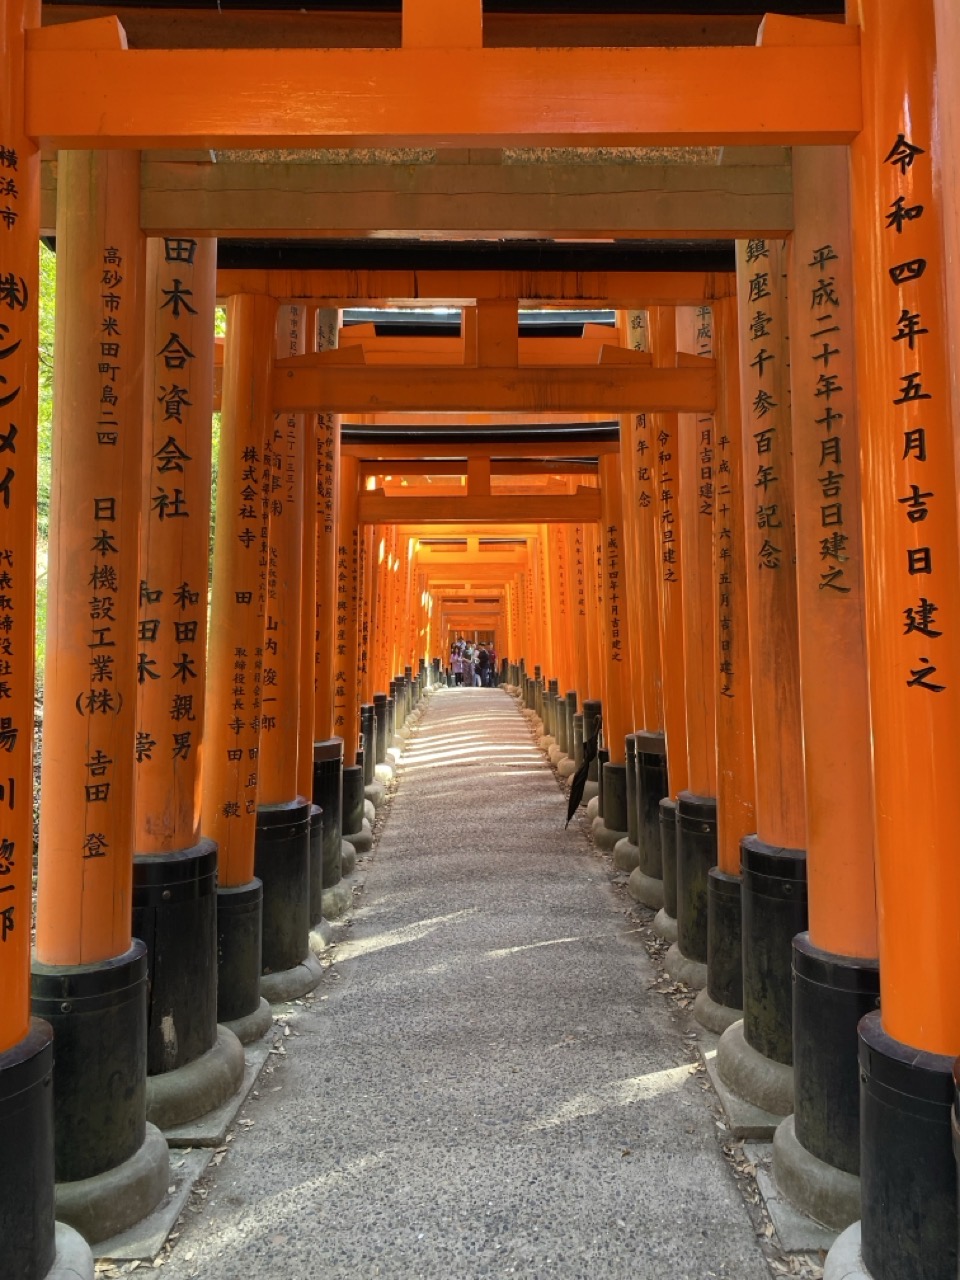 The view along the ‘thousand torii gates’ at Fushimi Inari